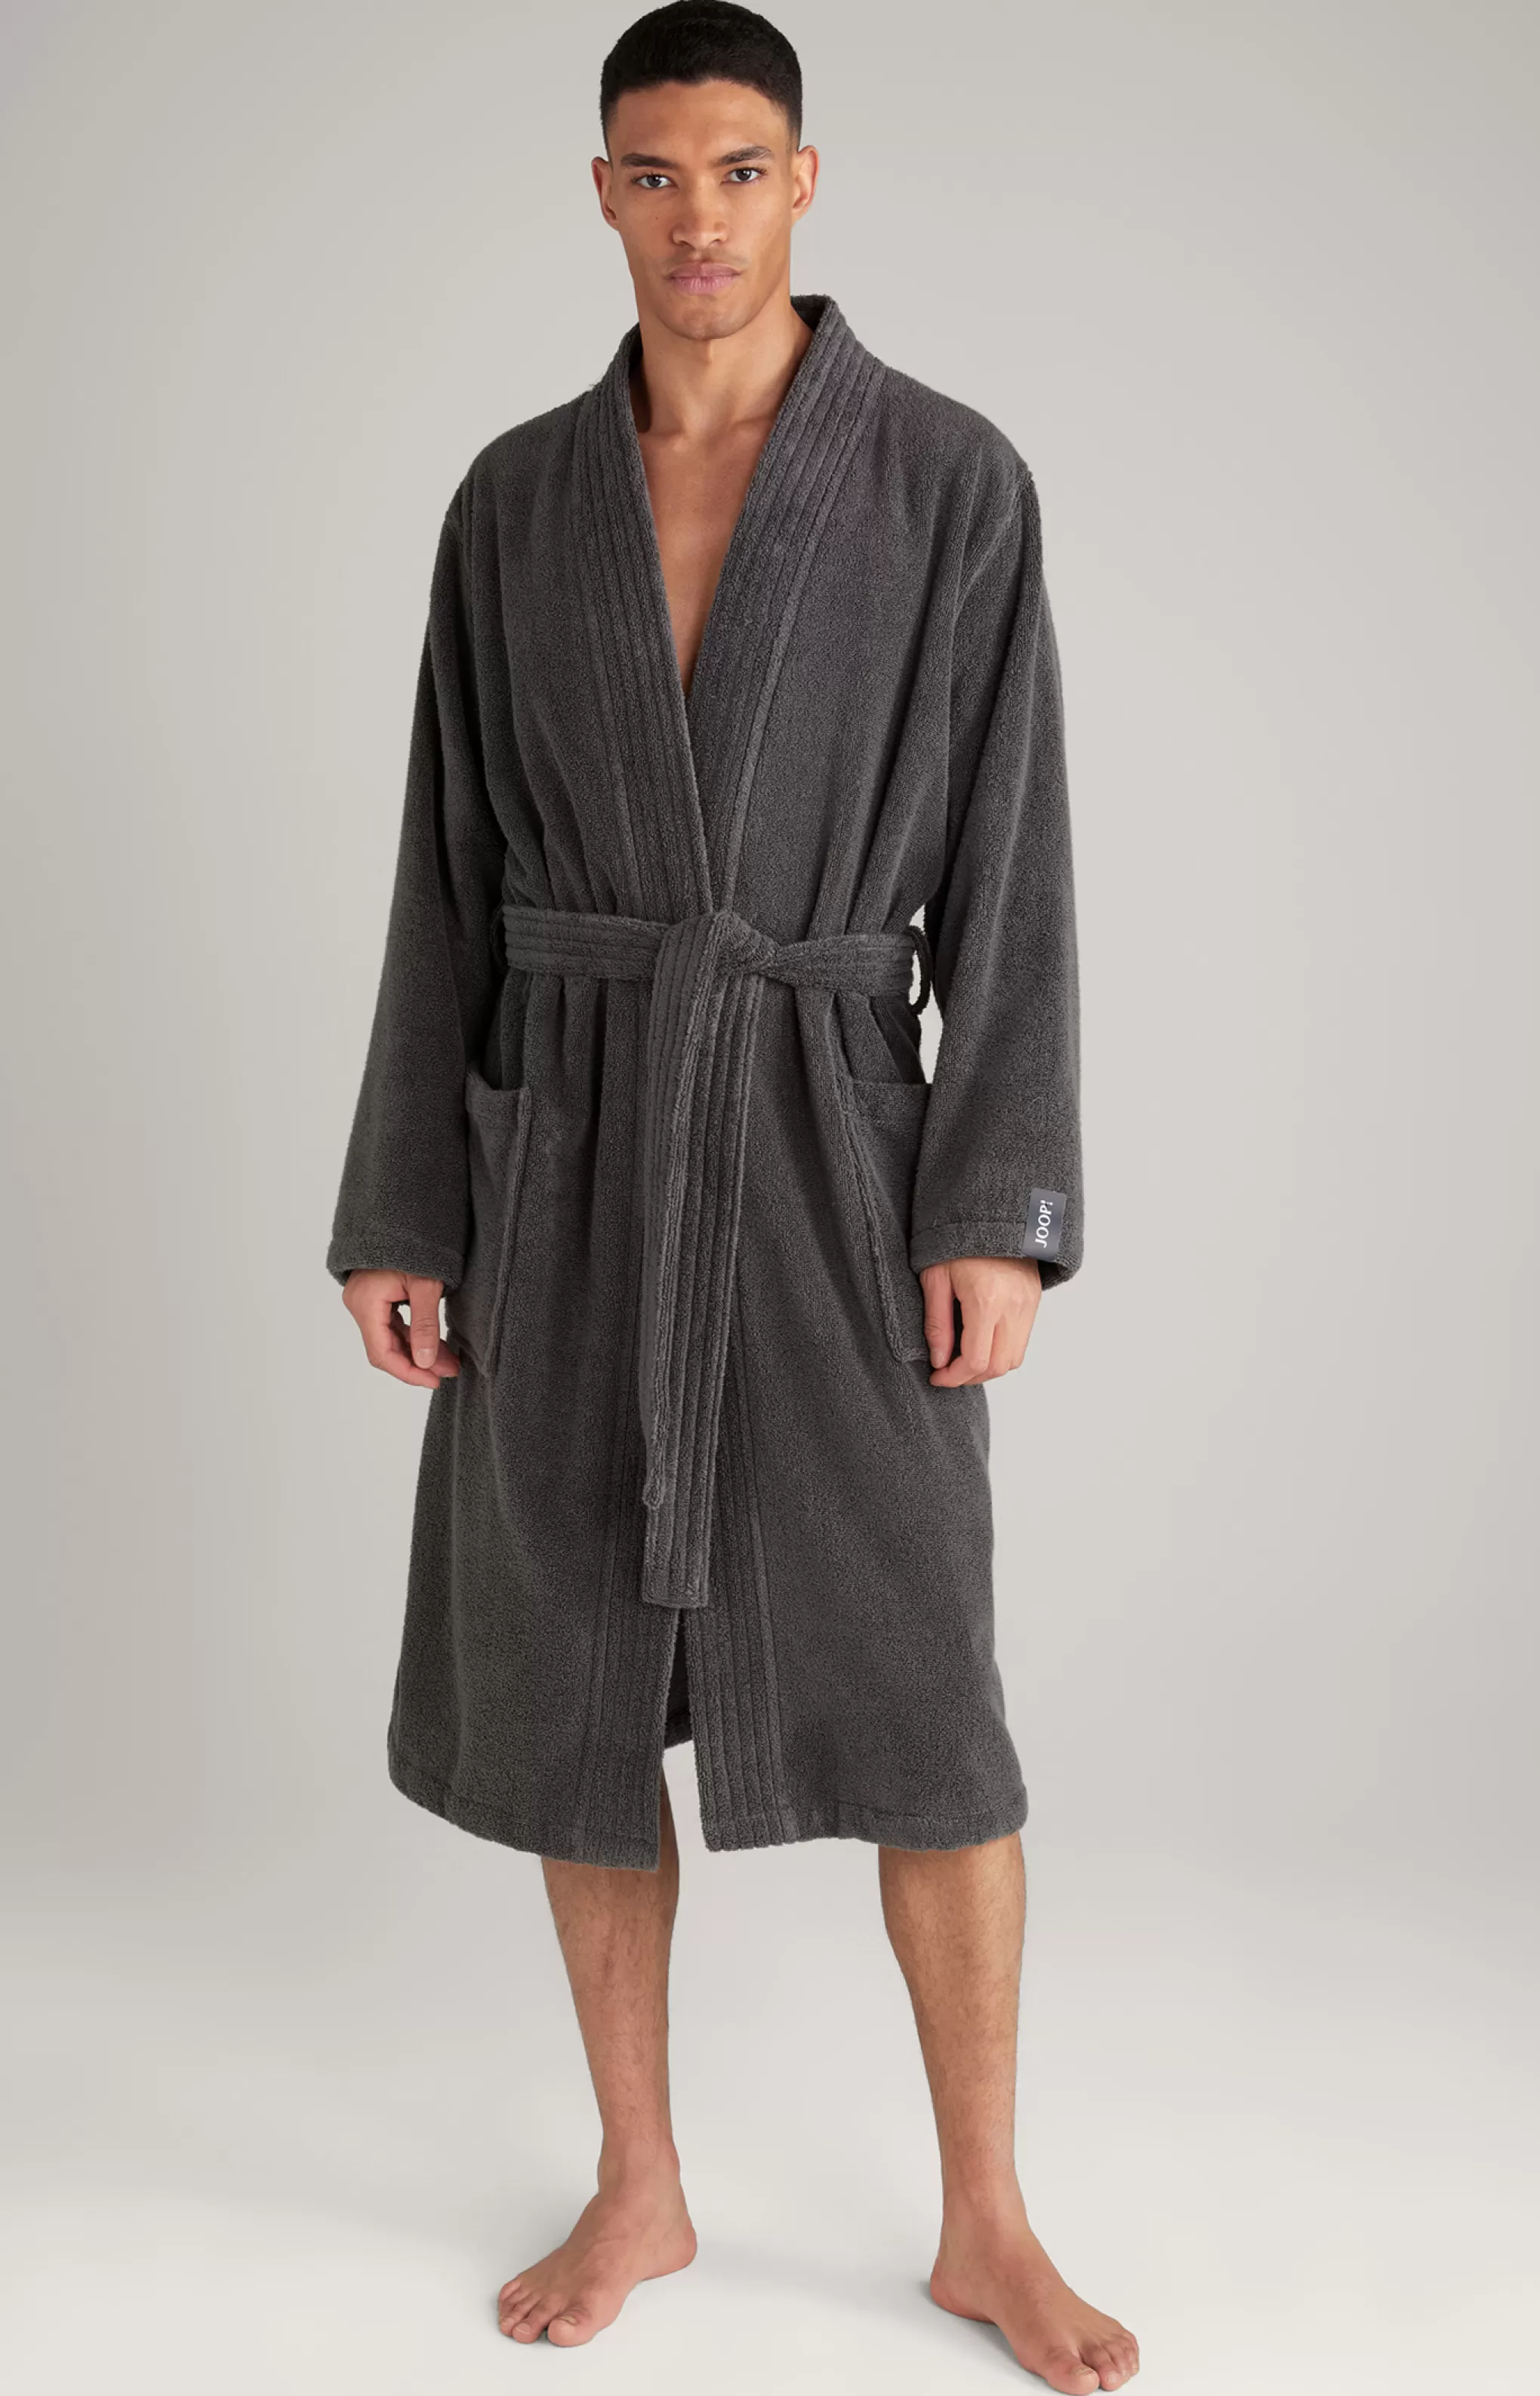 Bathrobes | Loungewear | Underwear*JOOP Bathrobes | Loungewear | Underwear Men’s bathrobe in